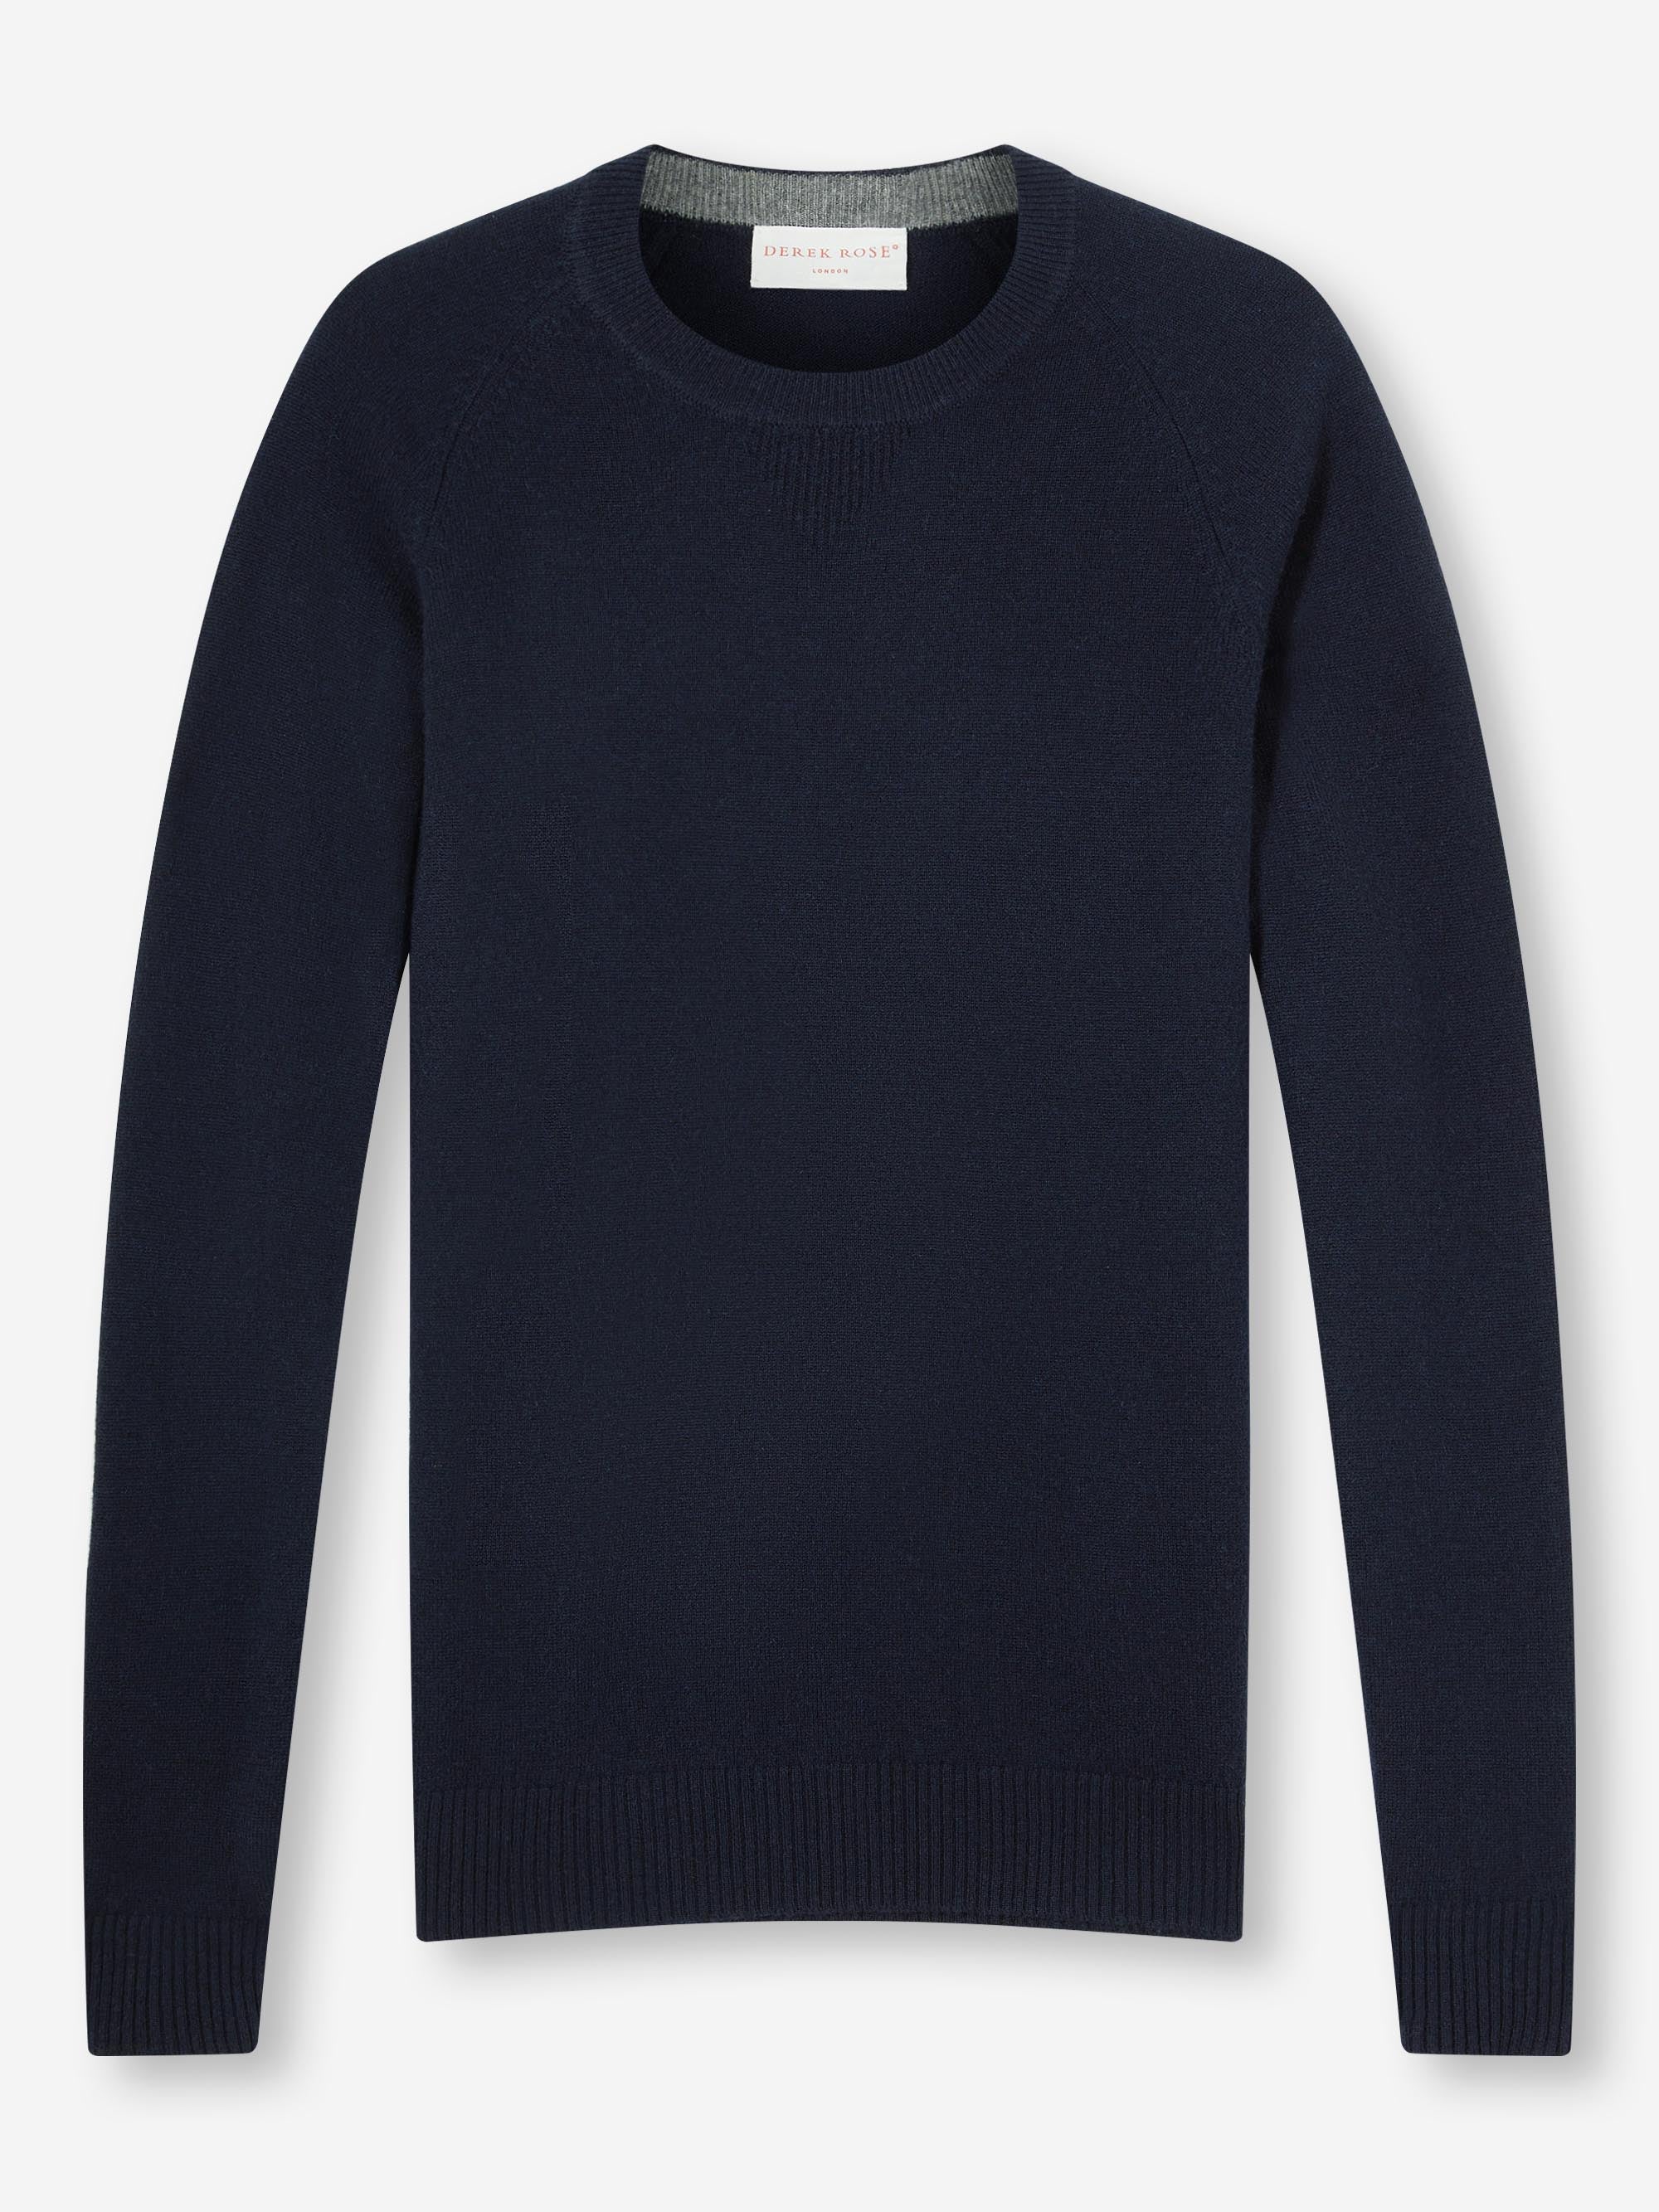 Men's Sweater Finley Cashmere Navy